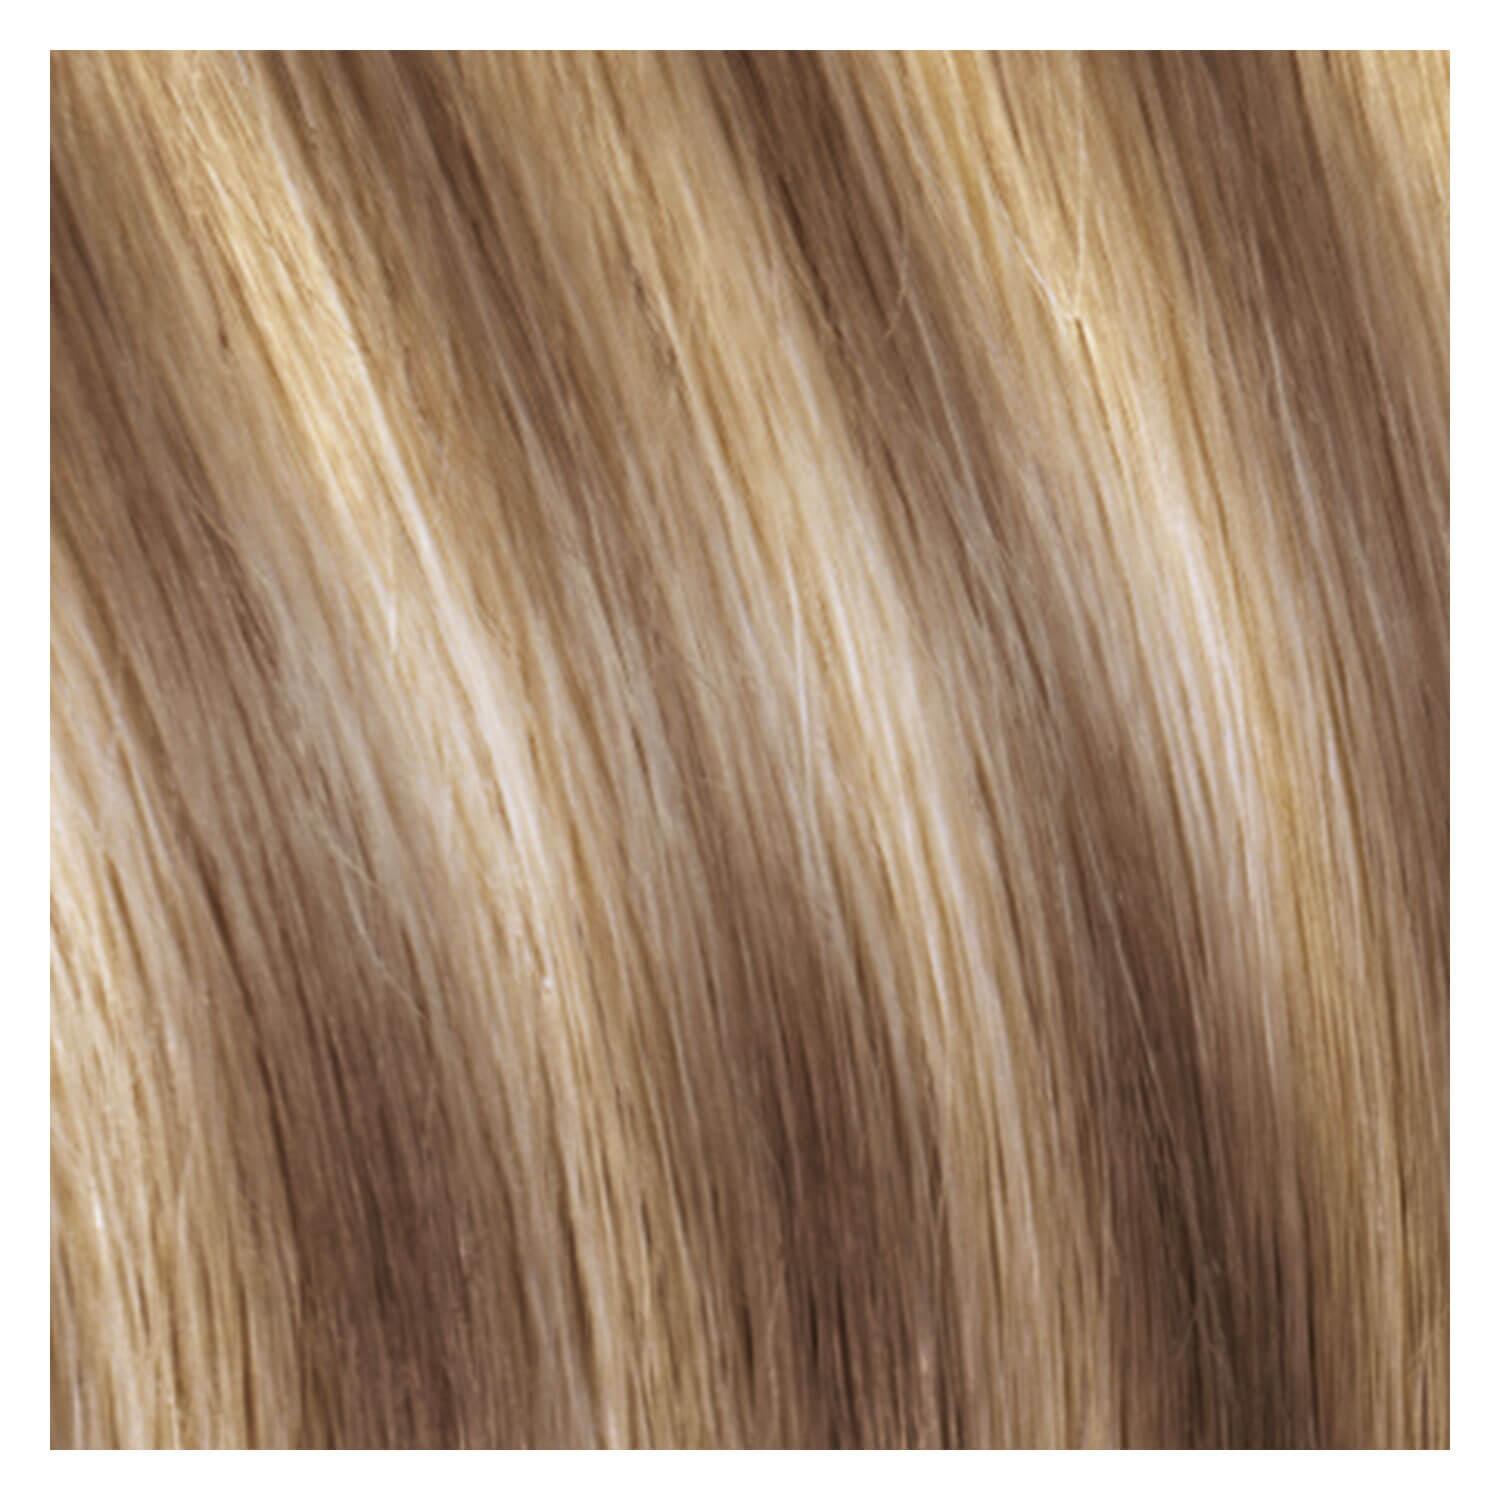 SHE Bonding-System Hair Extensions Wavy - M18/24 Medium Blond/Light Honey Blonde 55/60cm